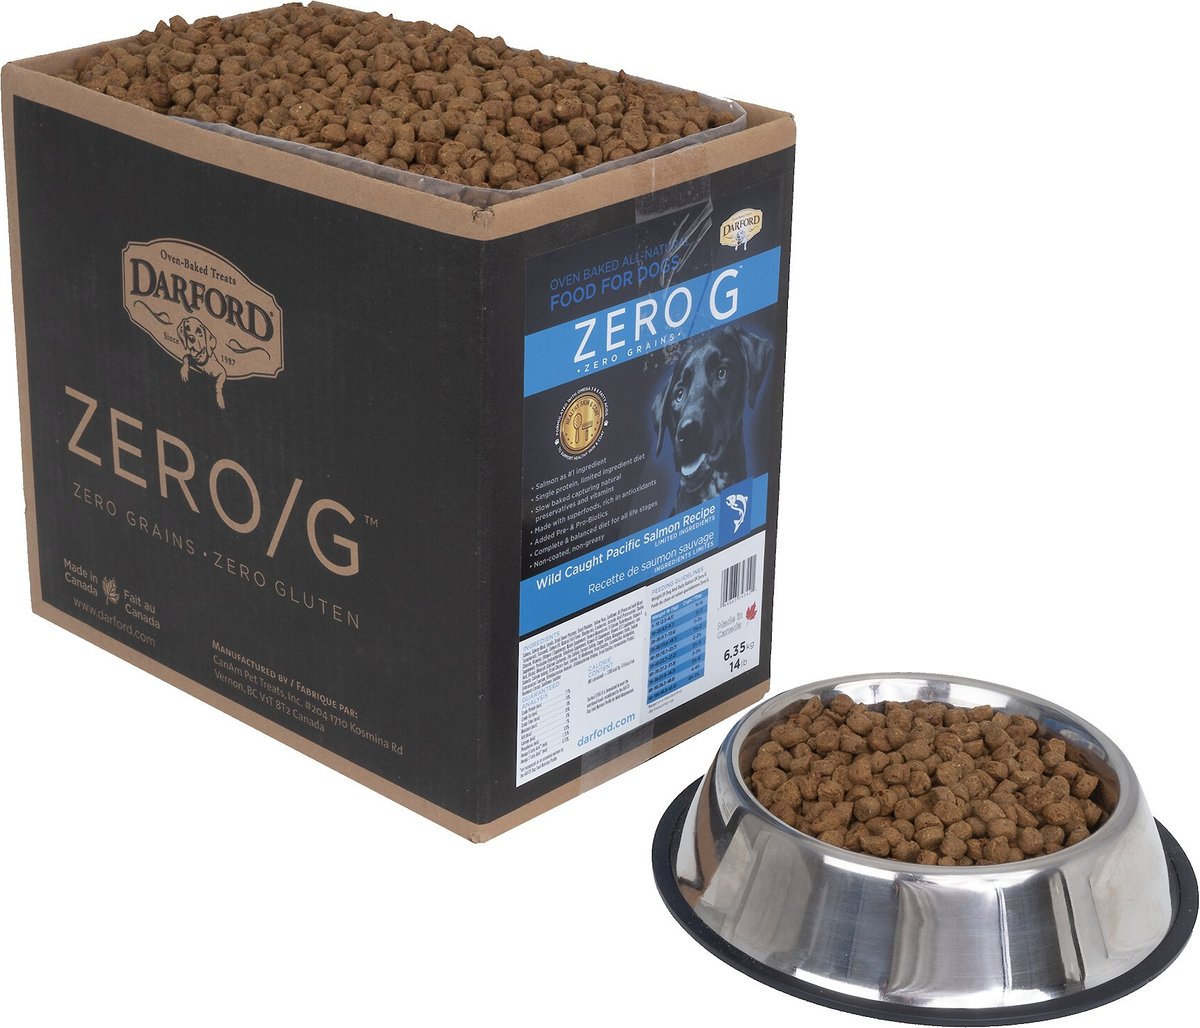 14-lb Darford Zero/G Dry Dog Food (Wild Caught Pacific Salmon Recipe) $27.59 w/ Autoship + Free S&H on $49+